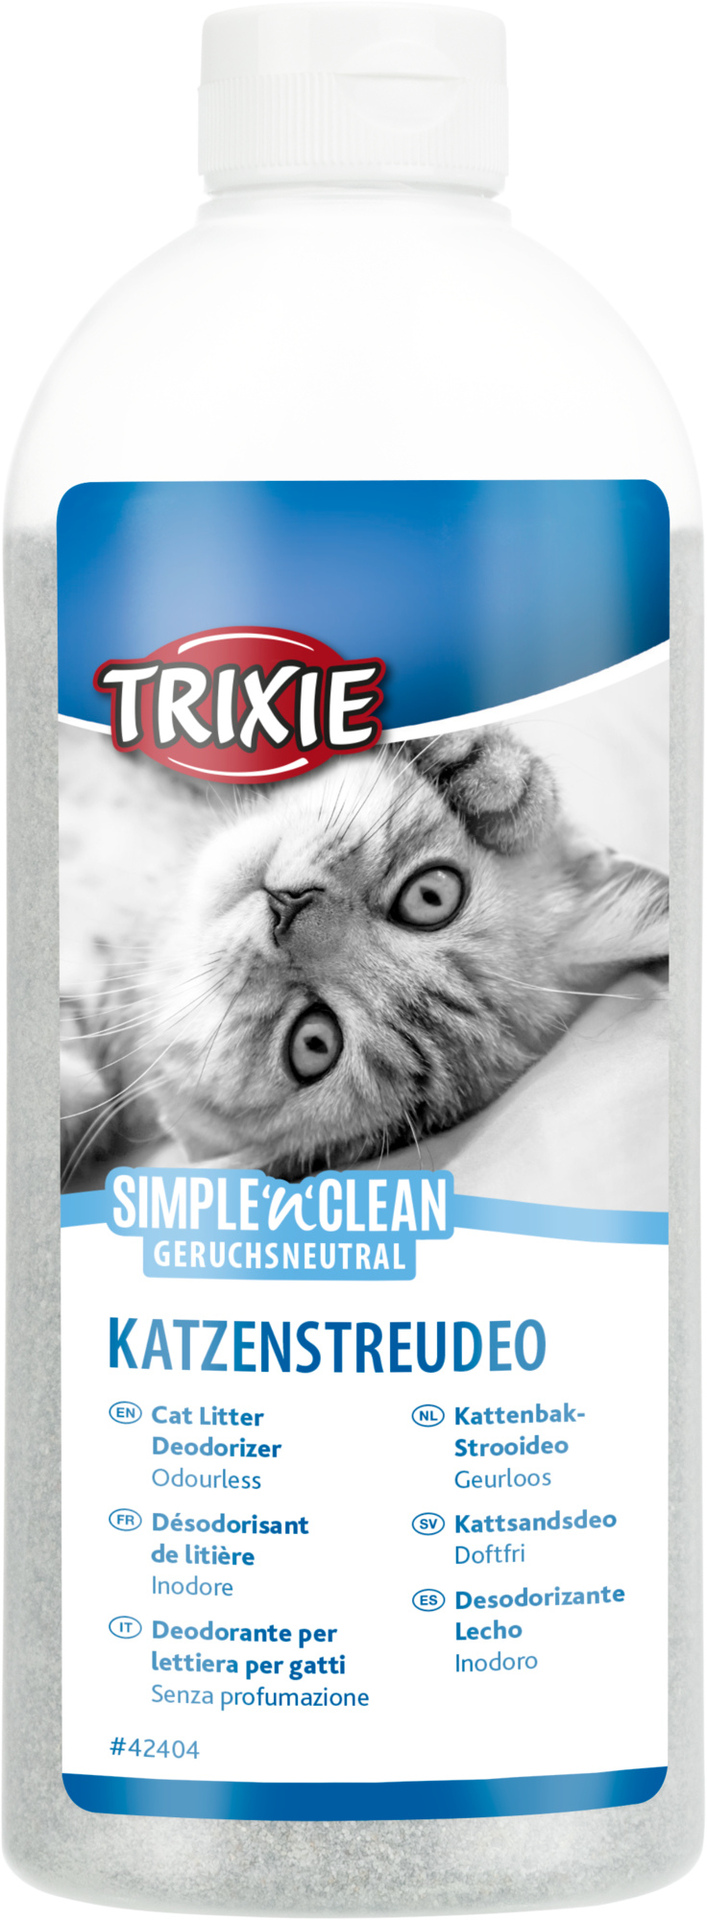 Trixie Heimtierbedarf Simple’n’Clean Katzenstreudeo 750g